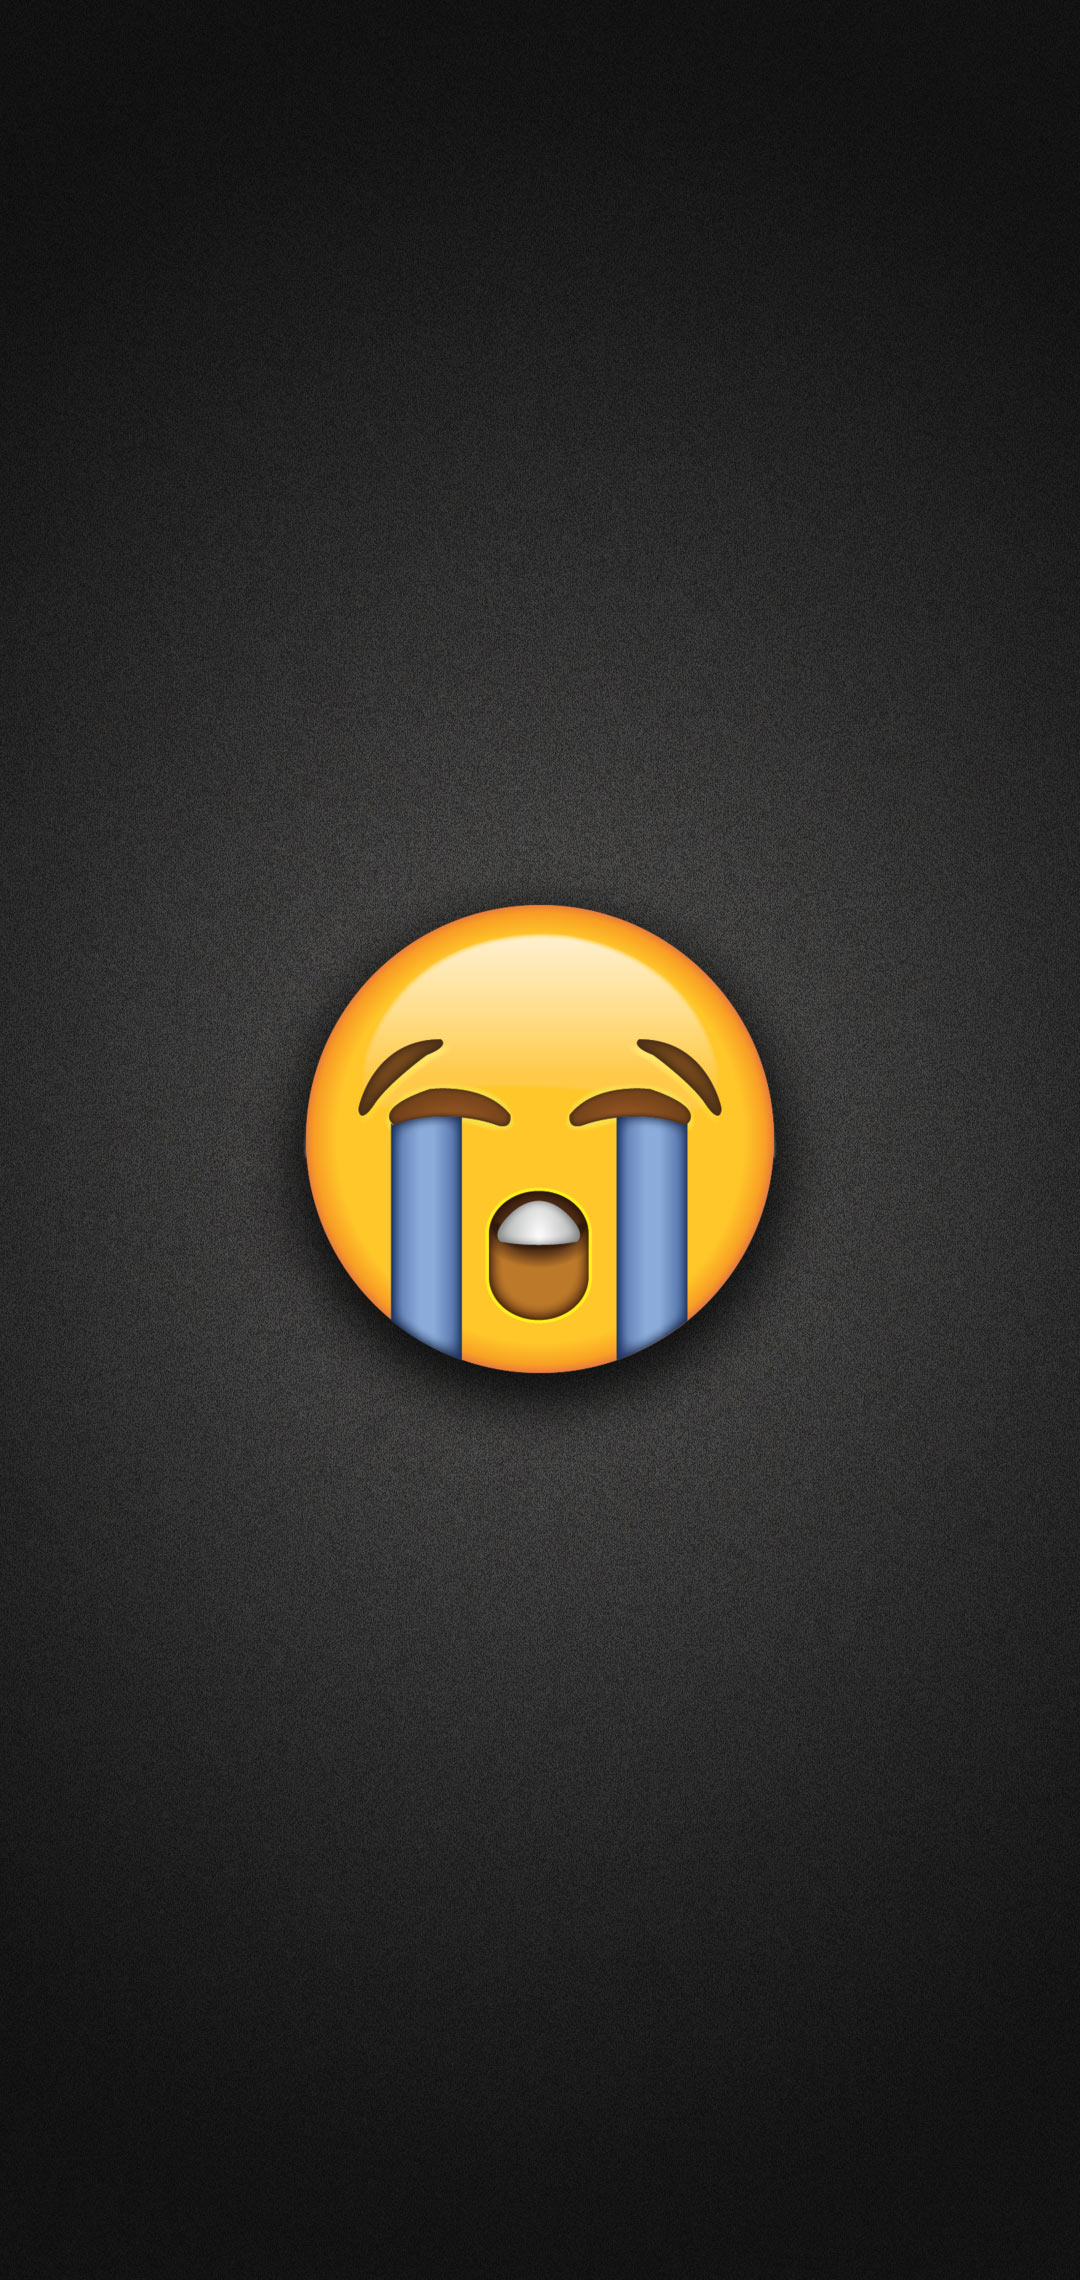 Loudly Crying Face Emoji Phone Wallpaper